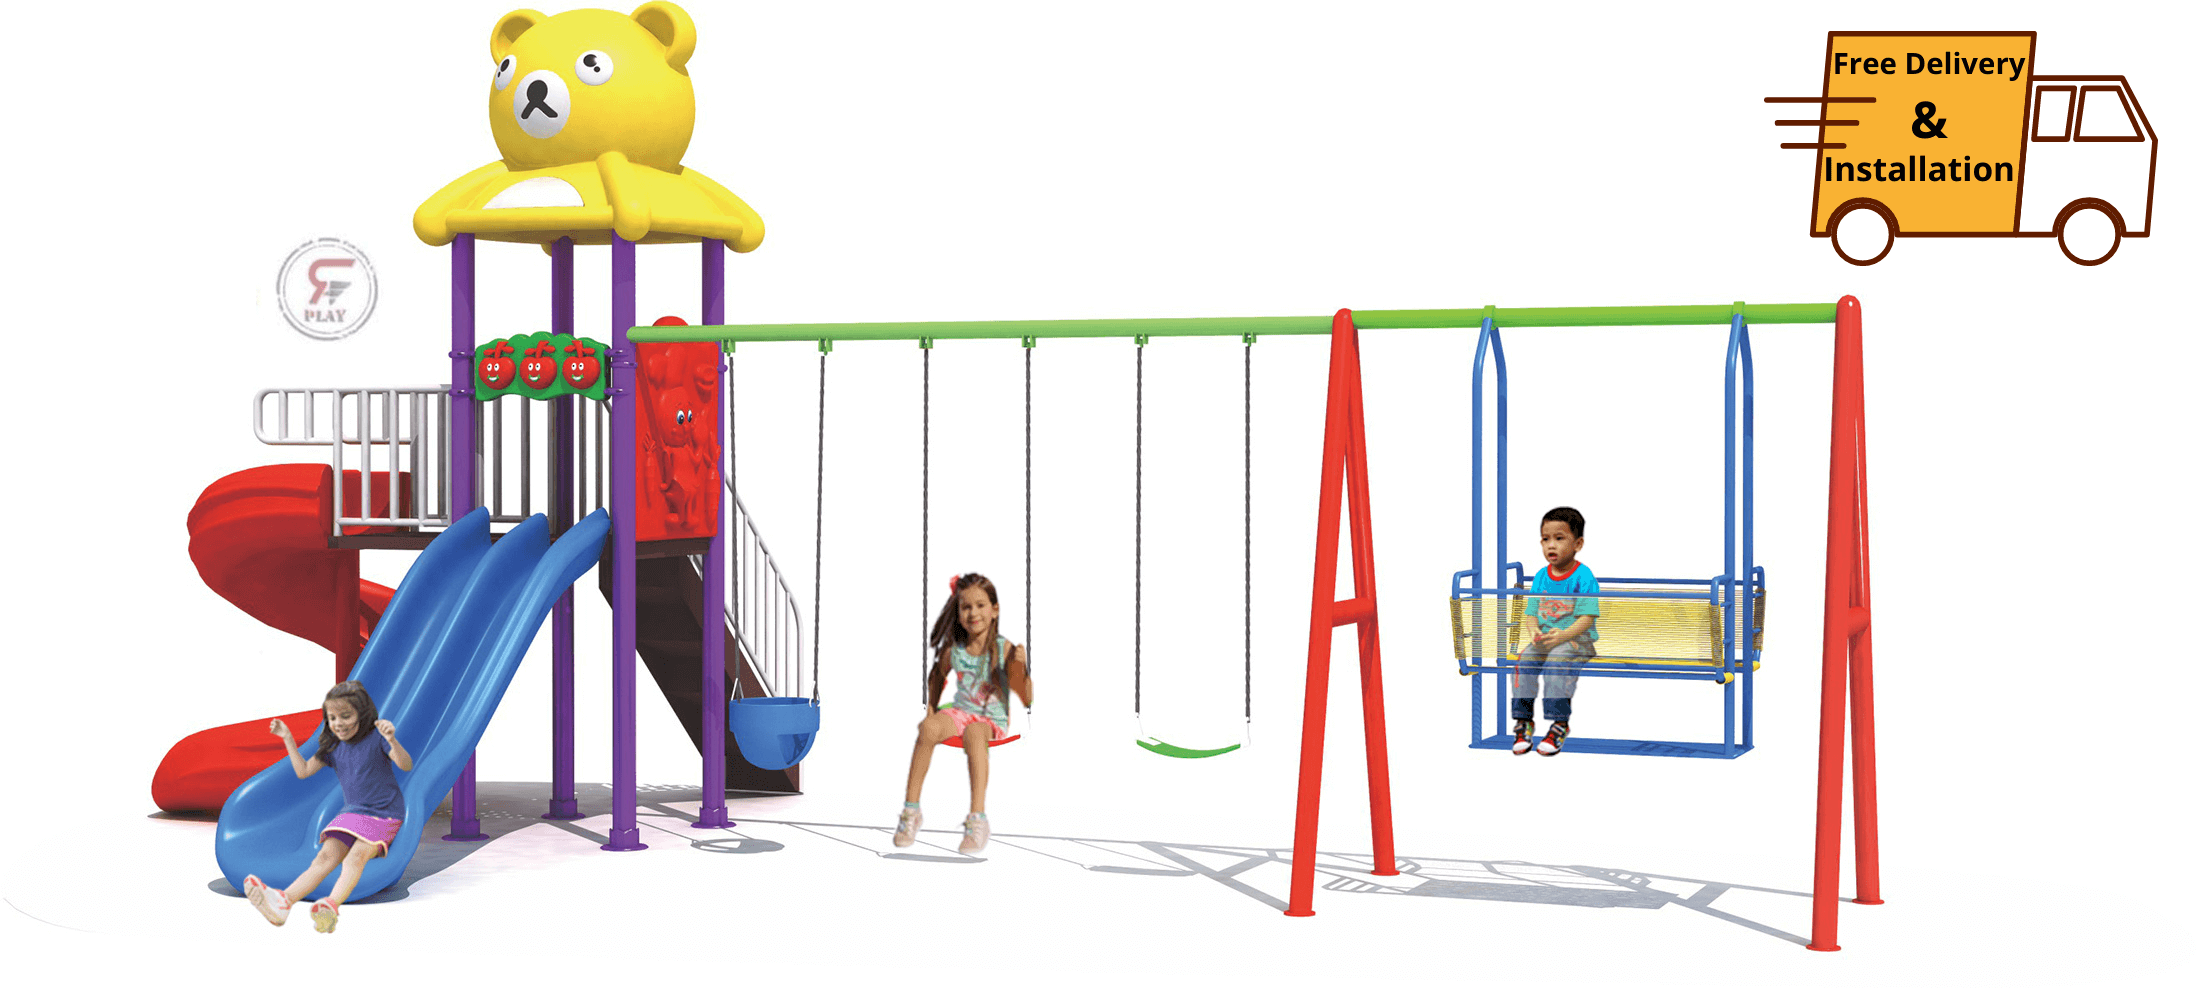 Teddy Bear Swing and Slide Multi Playset for Kids